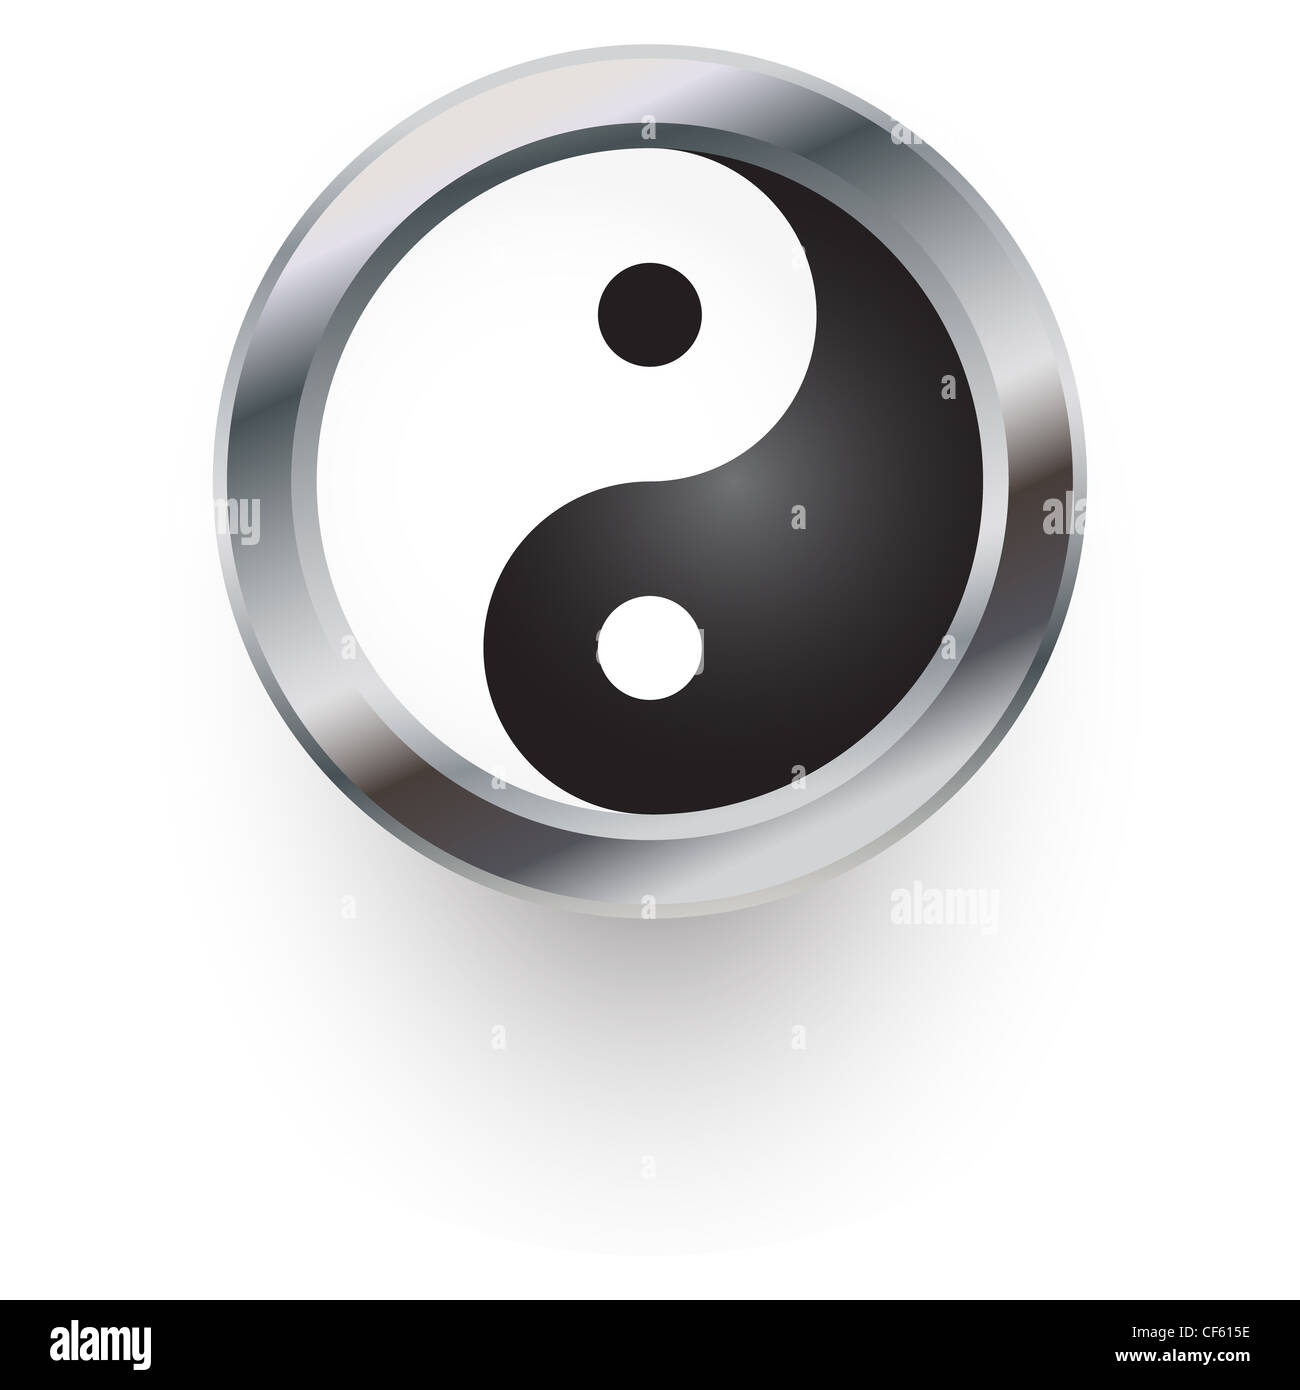 yin yang symbol as button or badge Stock Photo - Alamy